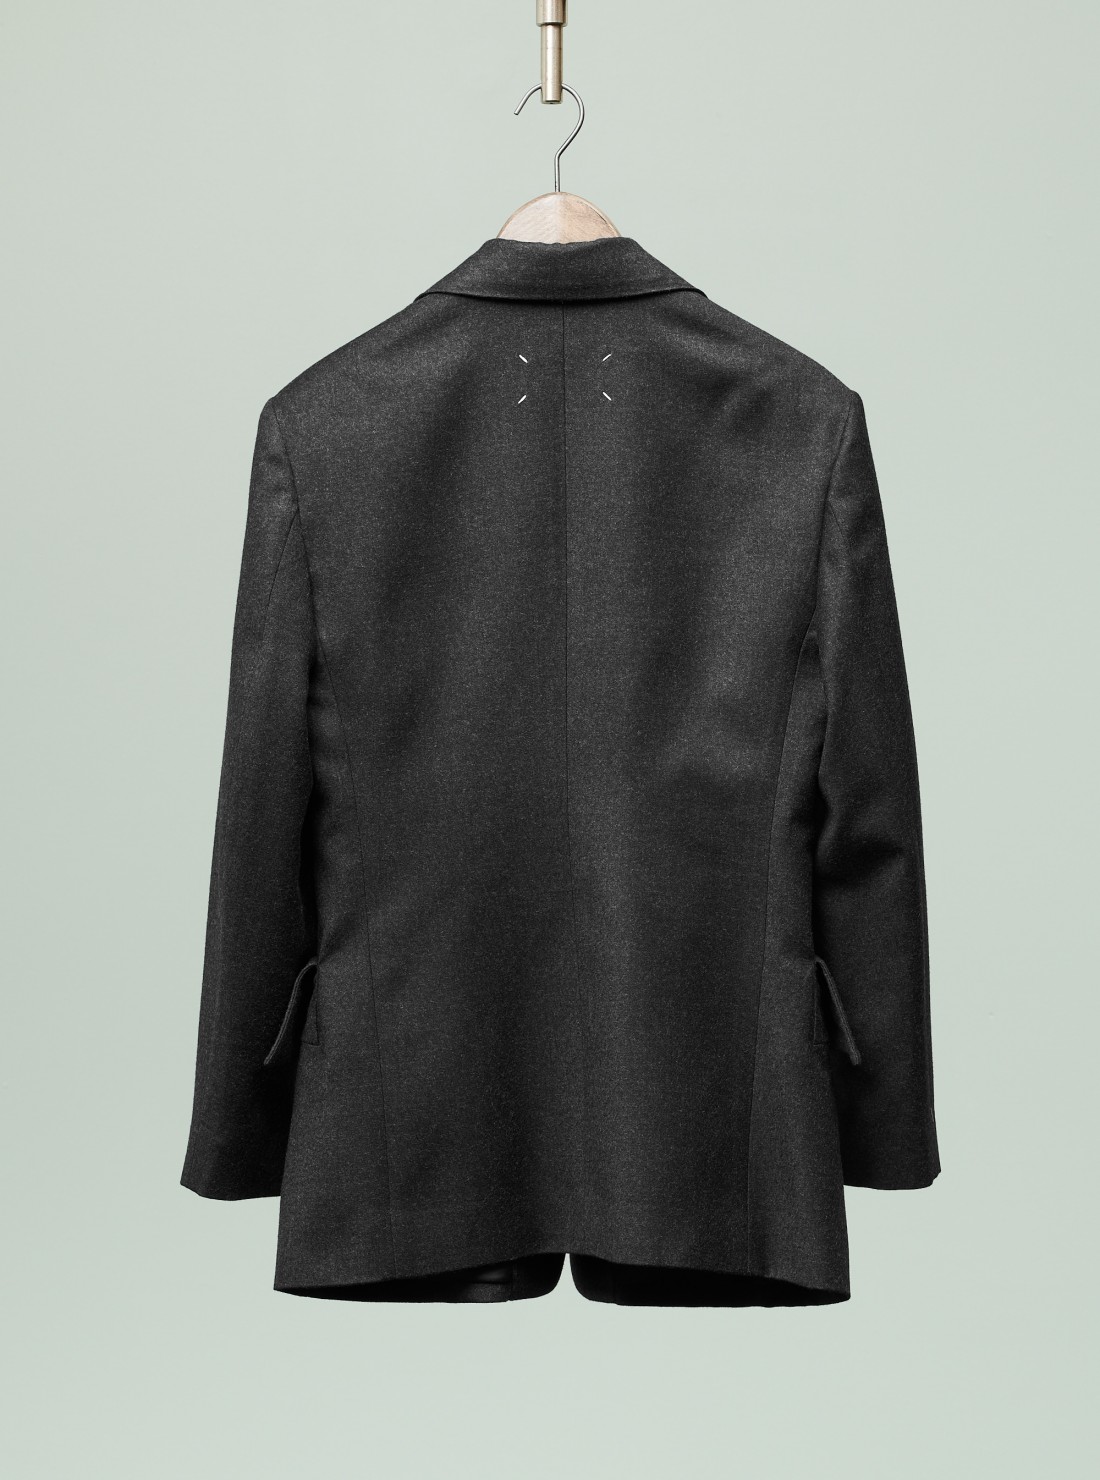 couture suit jacket